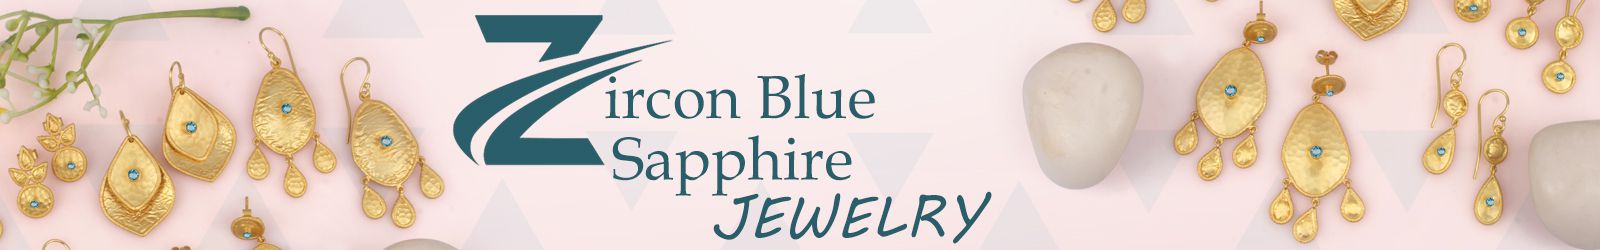 Silver Zircon Blue Sapphire Jewelry Wholesale Supplier